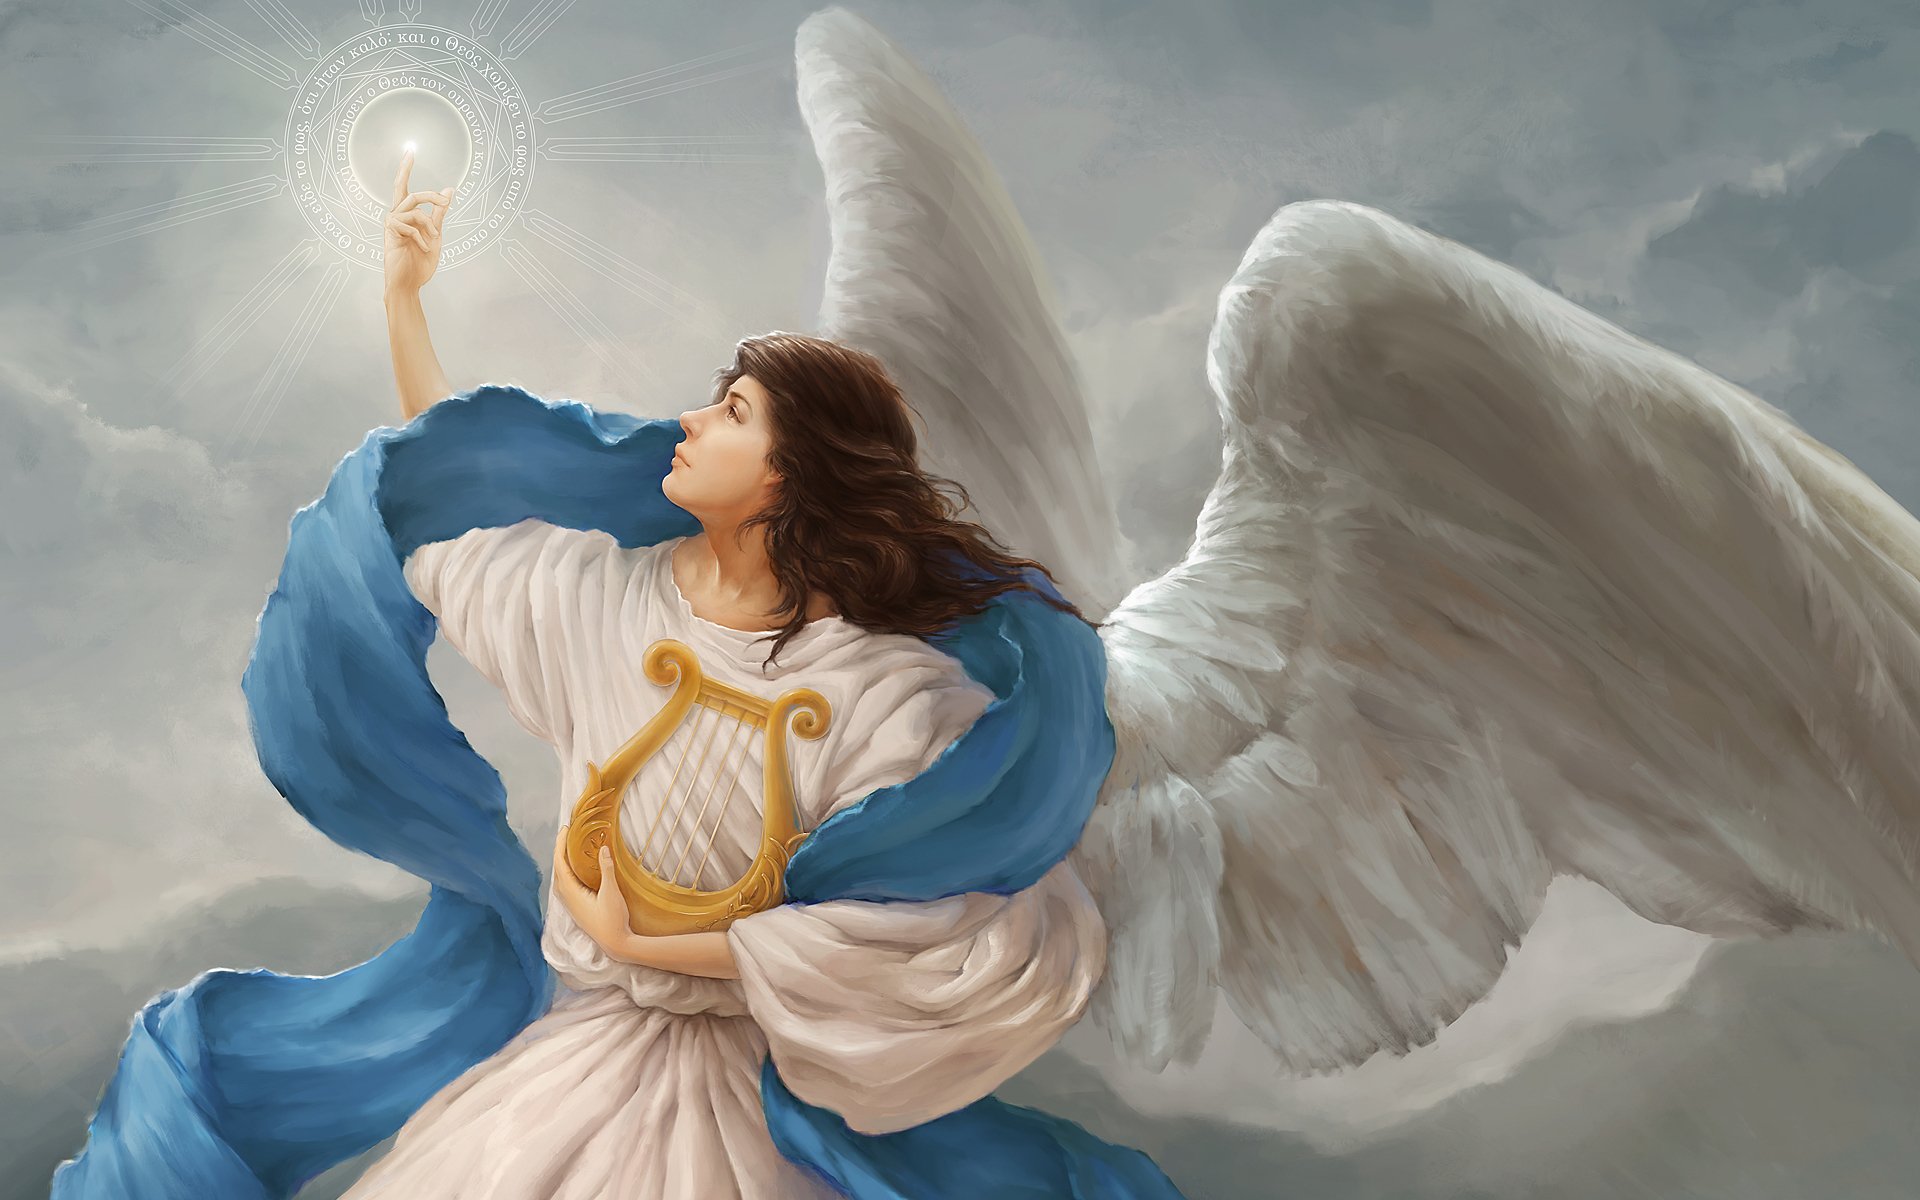 Angel painting photo - Free Painting Image on Unsplash